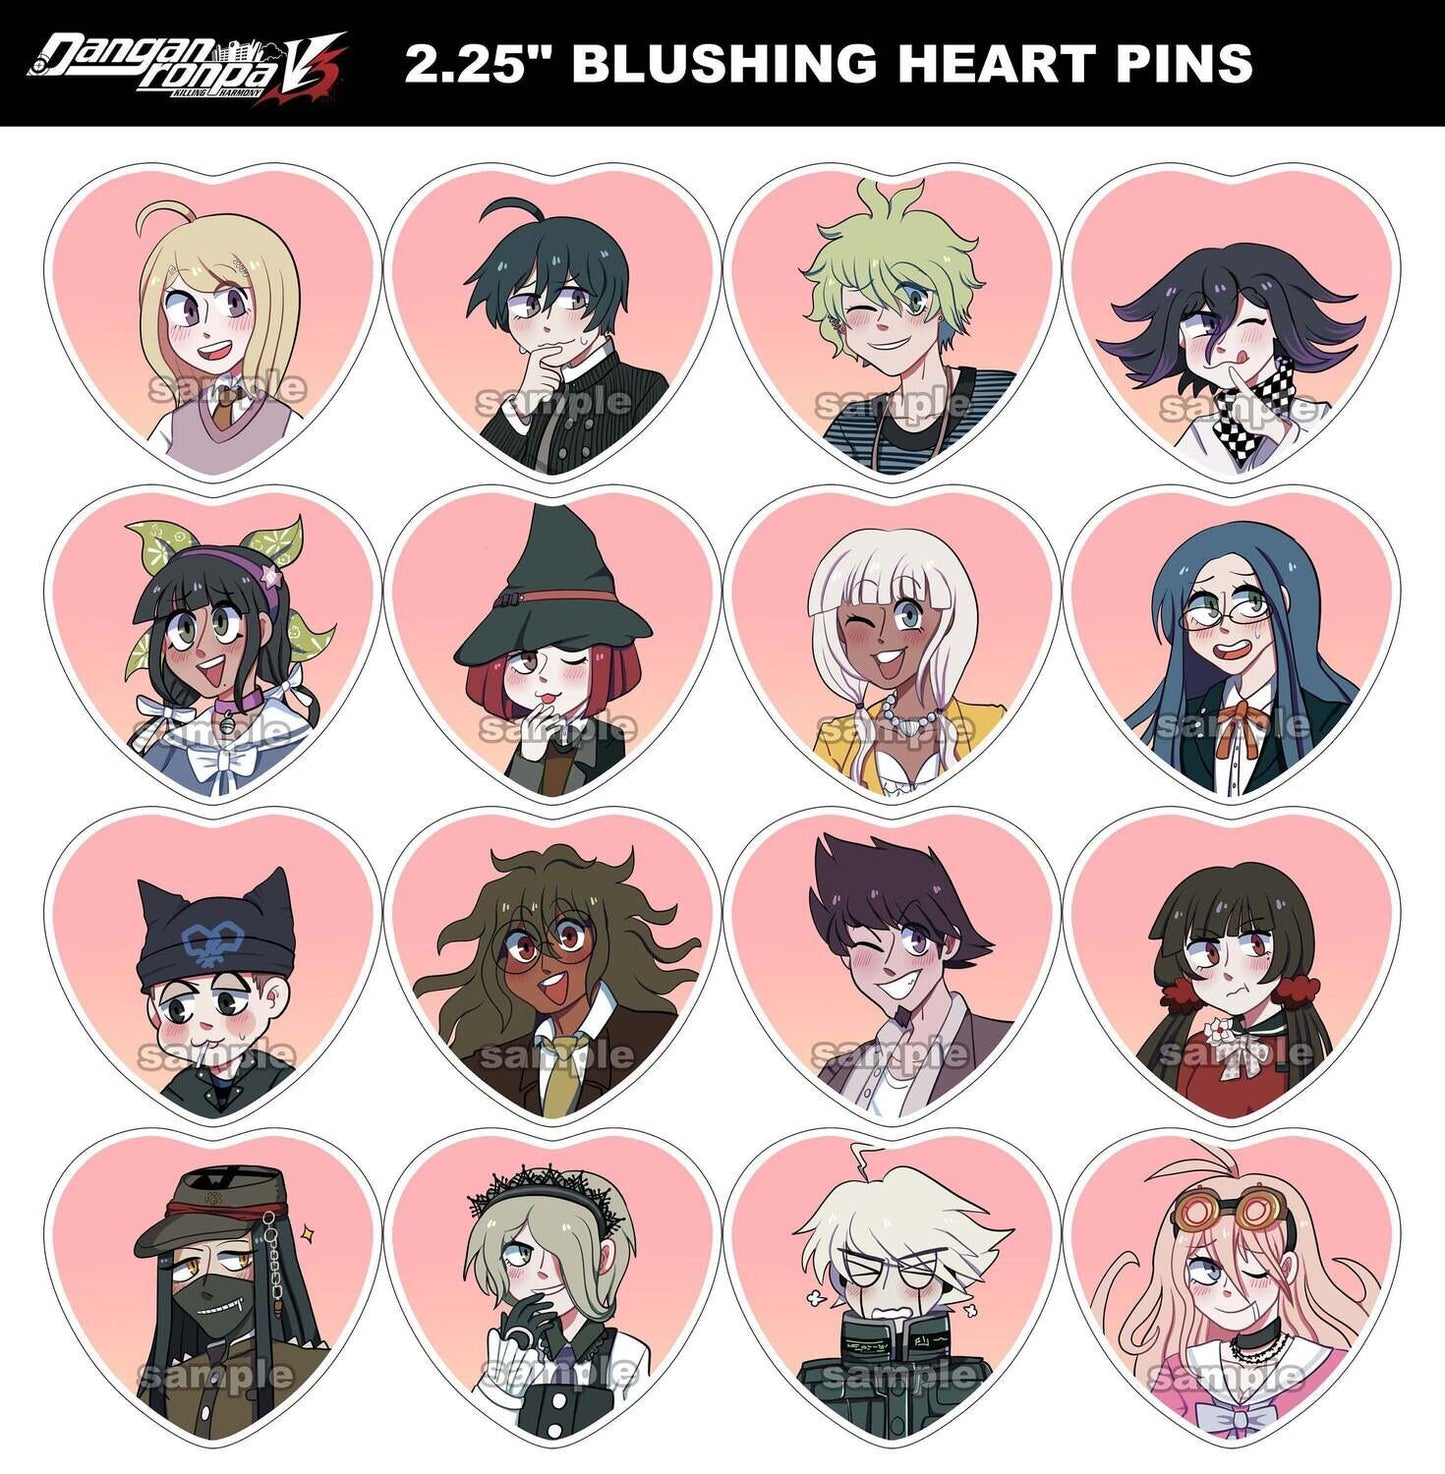 New Danganronpa V3 Blushing Heart pins